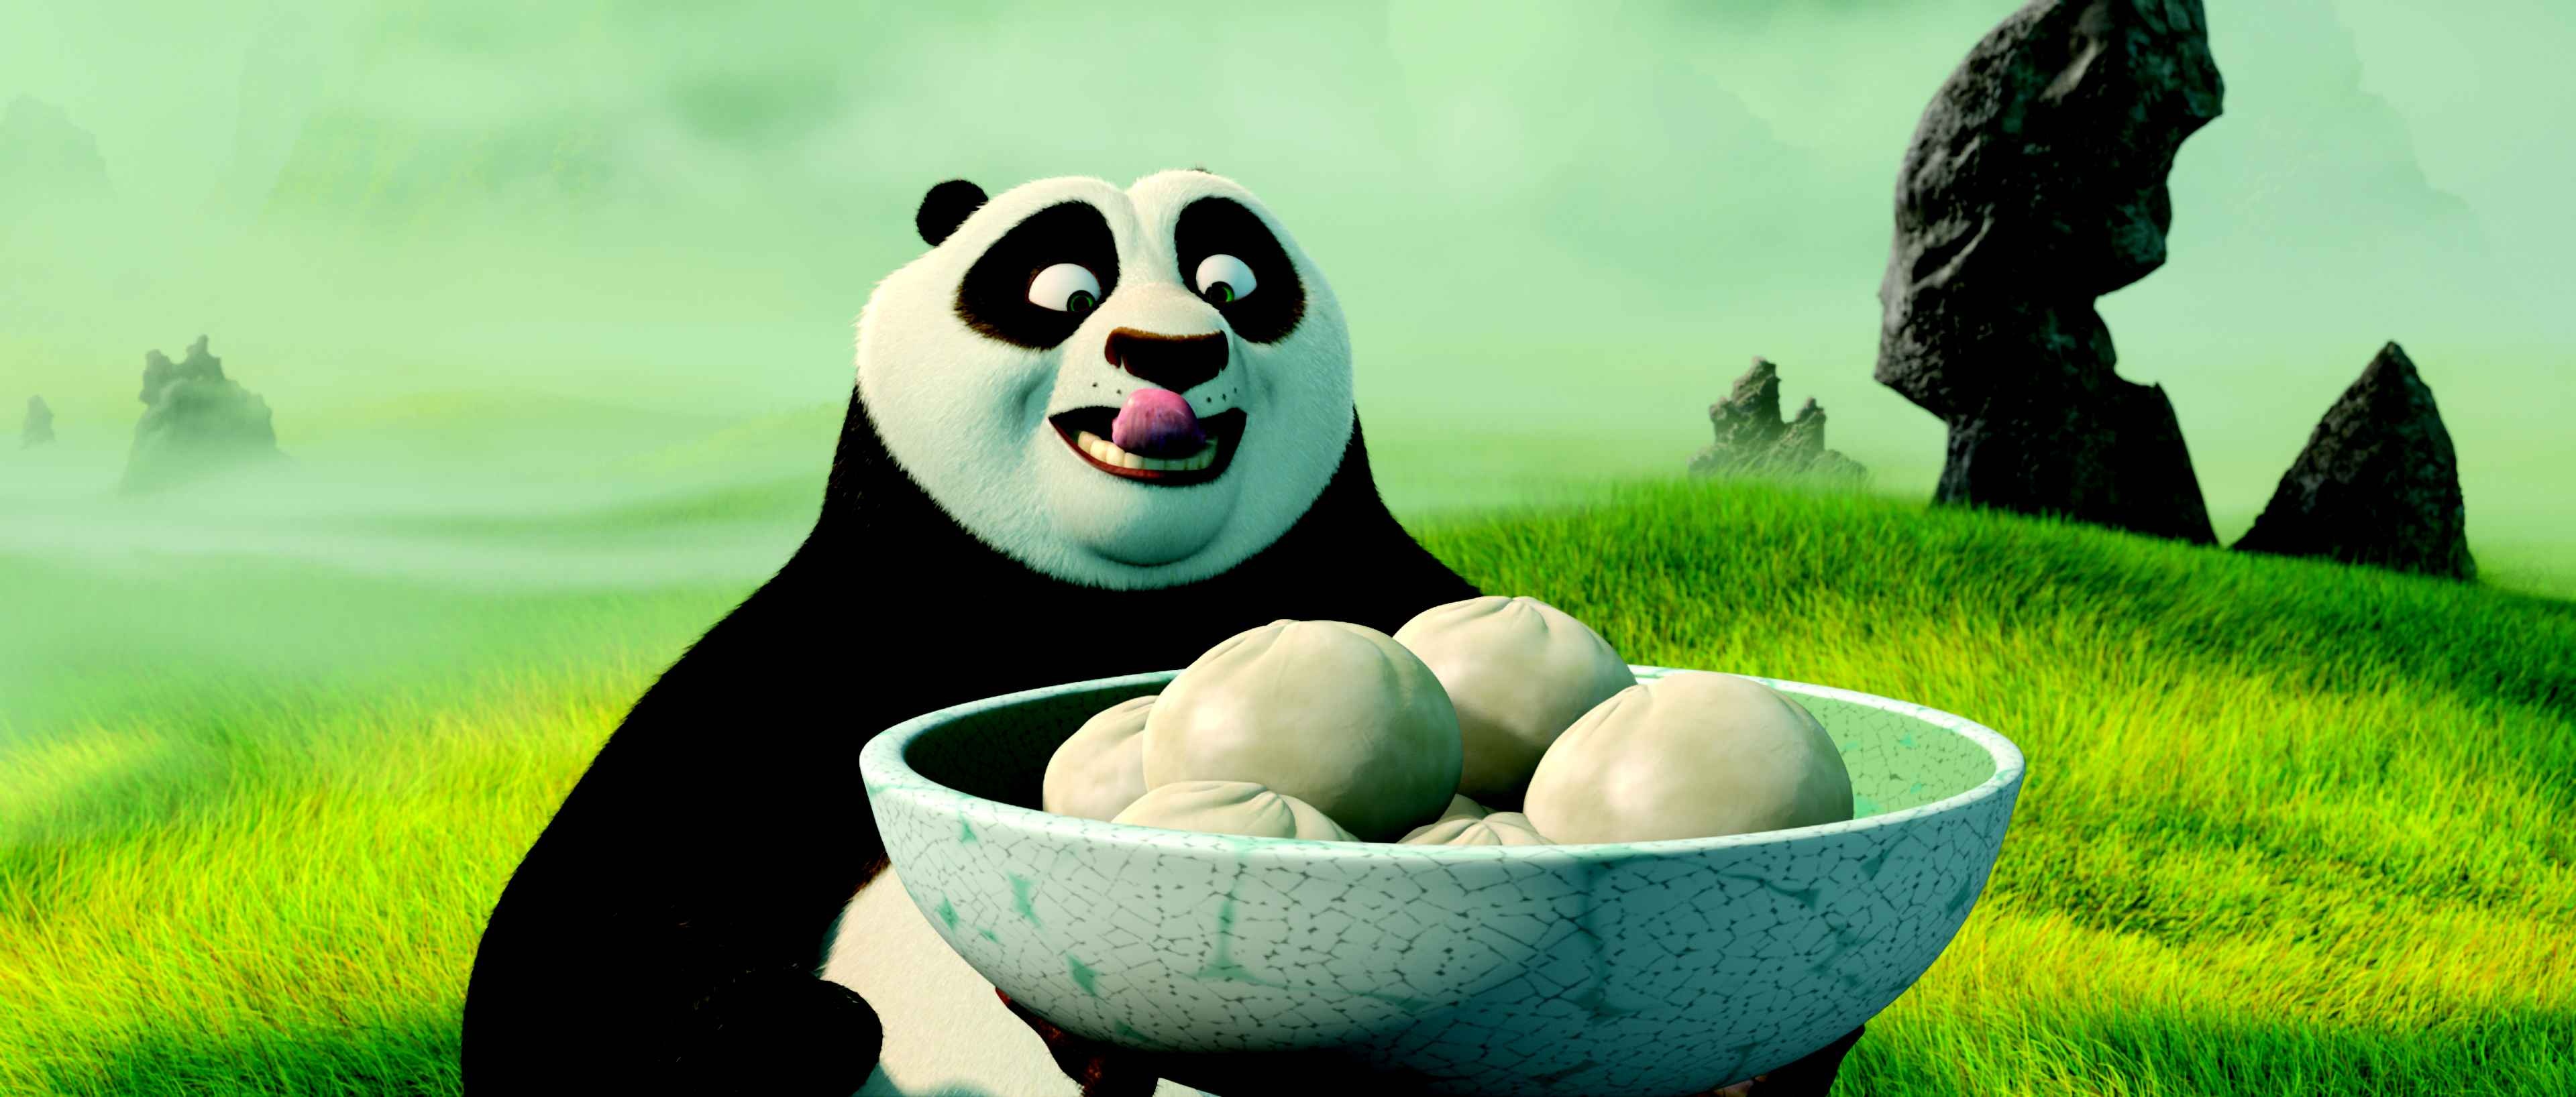 Kung Fu Panda, Po's iconic pose, Impressive wallpaper, Unforgettable image, 3840x1640 Dual Screen Desktop